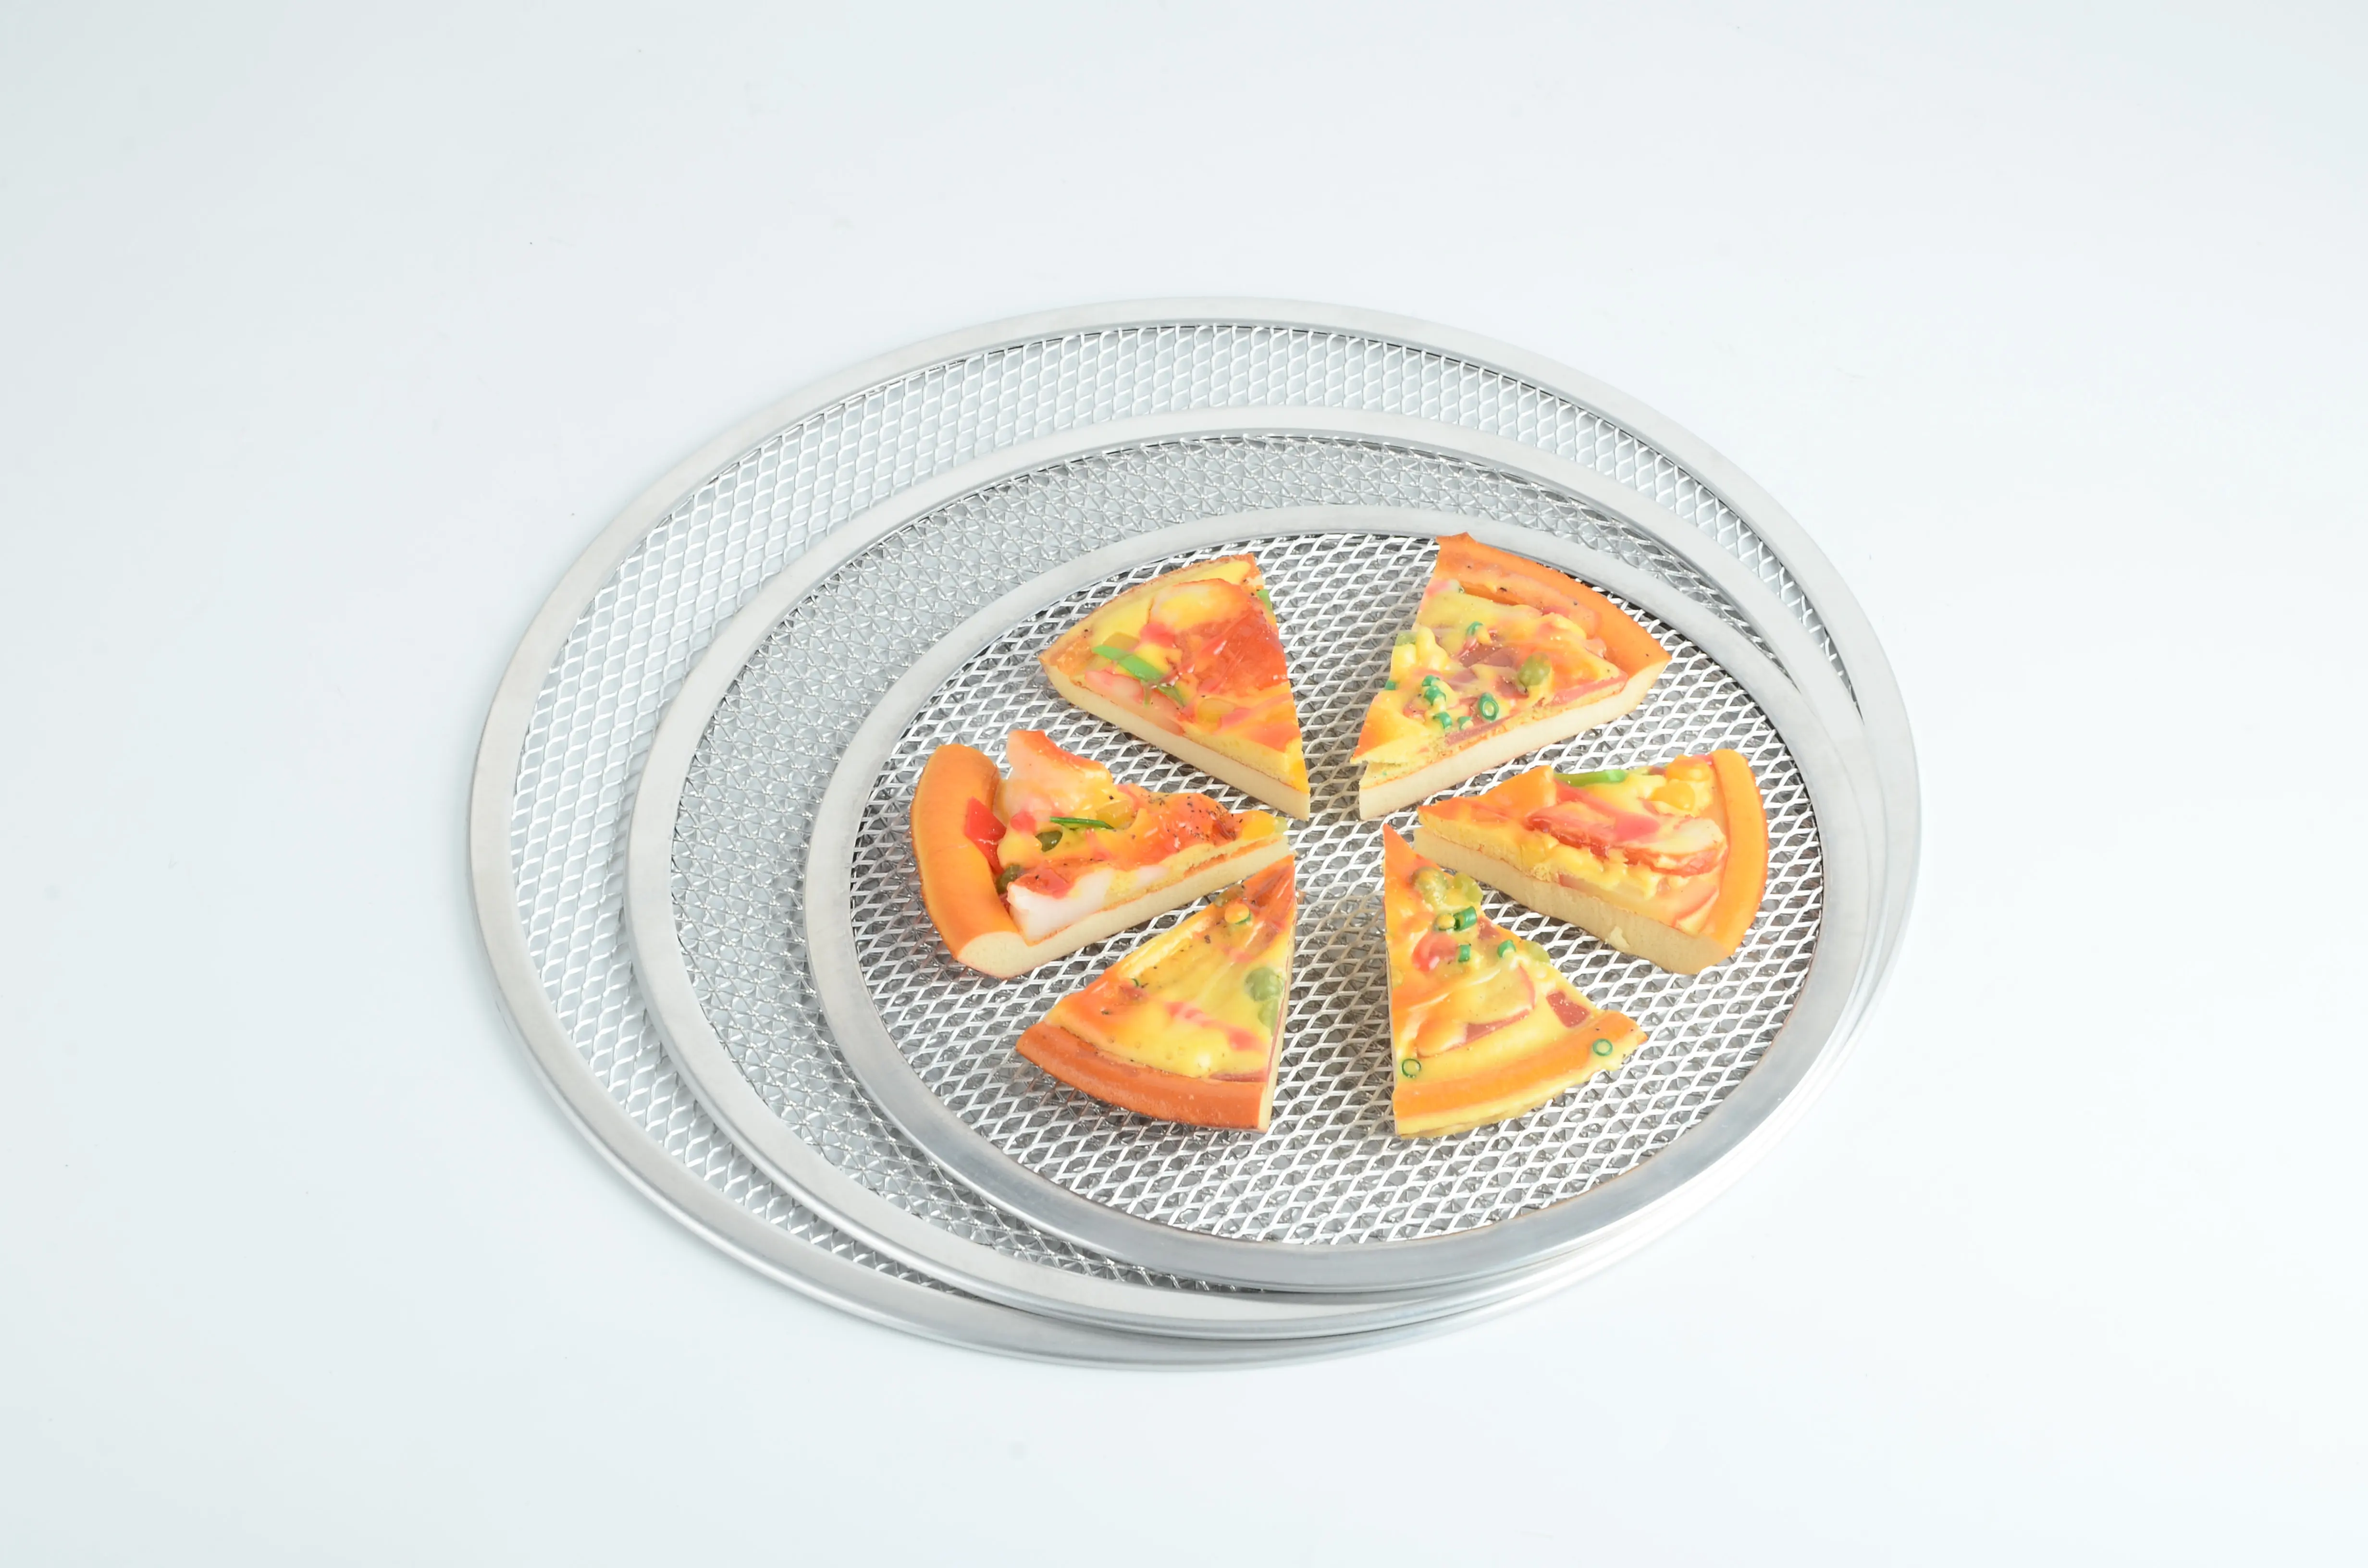 Setka dlya pitsa Stainless Steel pizza Mesh Plate 28sm. Тарелка для пиццы. Круглая форма для пиццы. Тарелка для пиццы стеклянная.